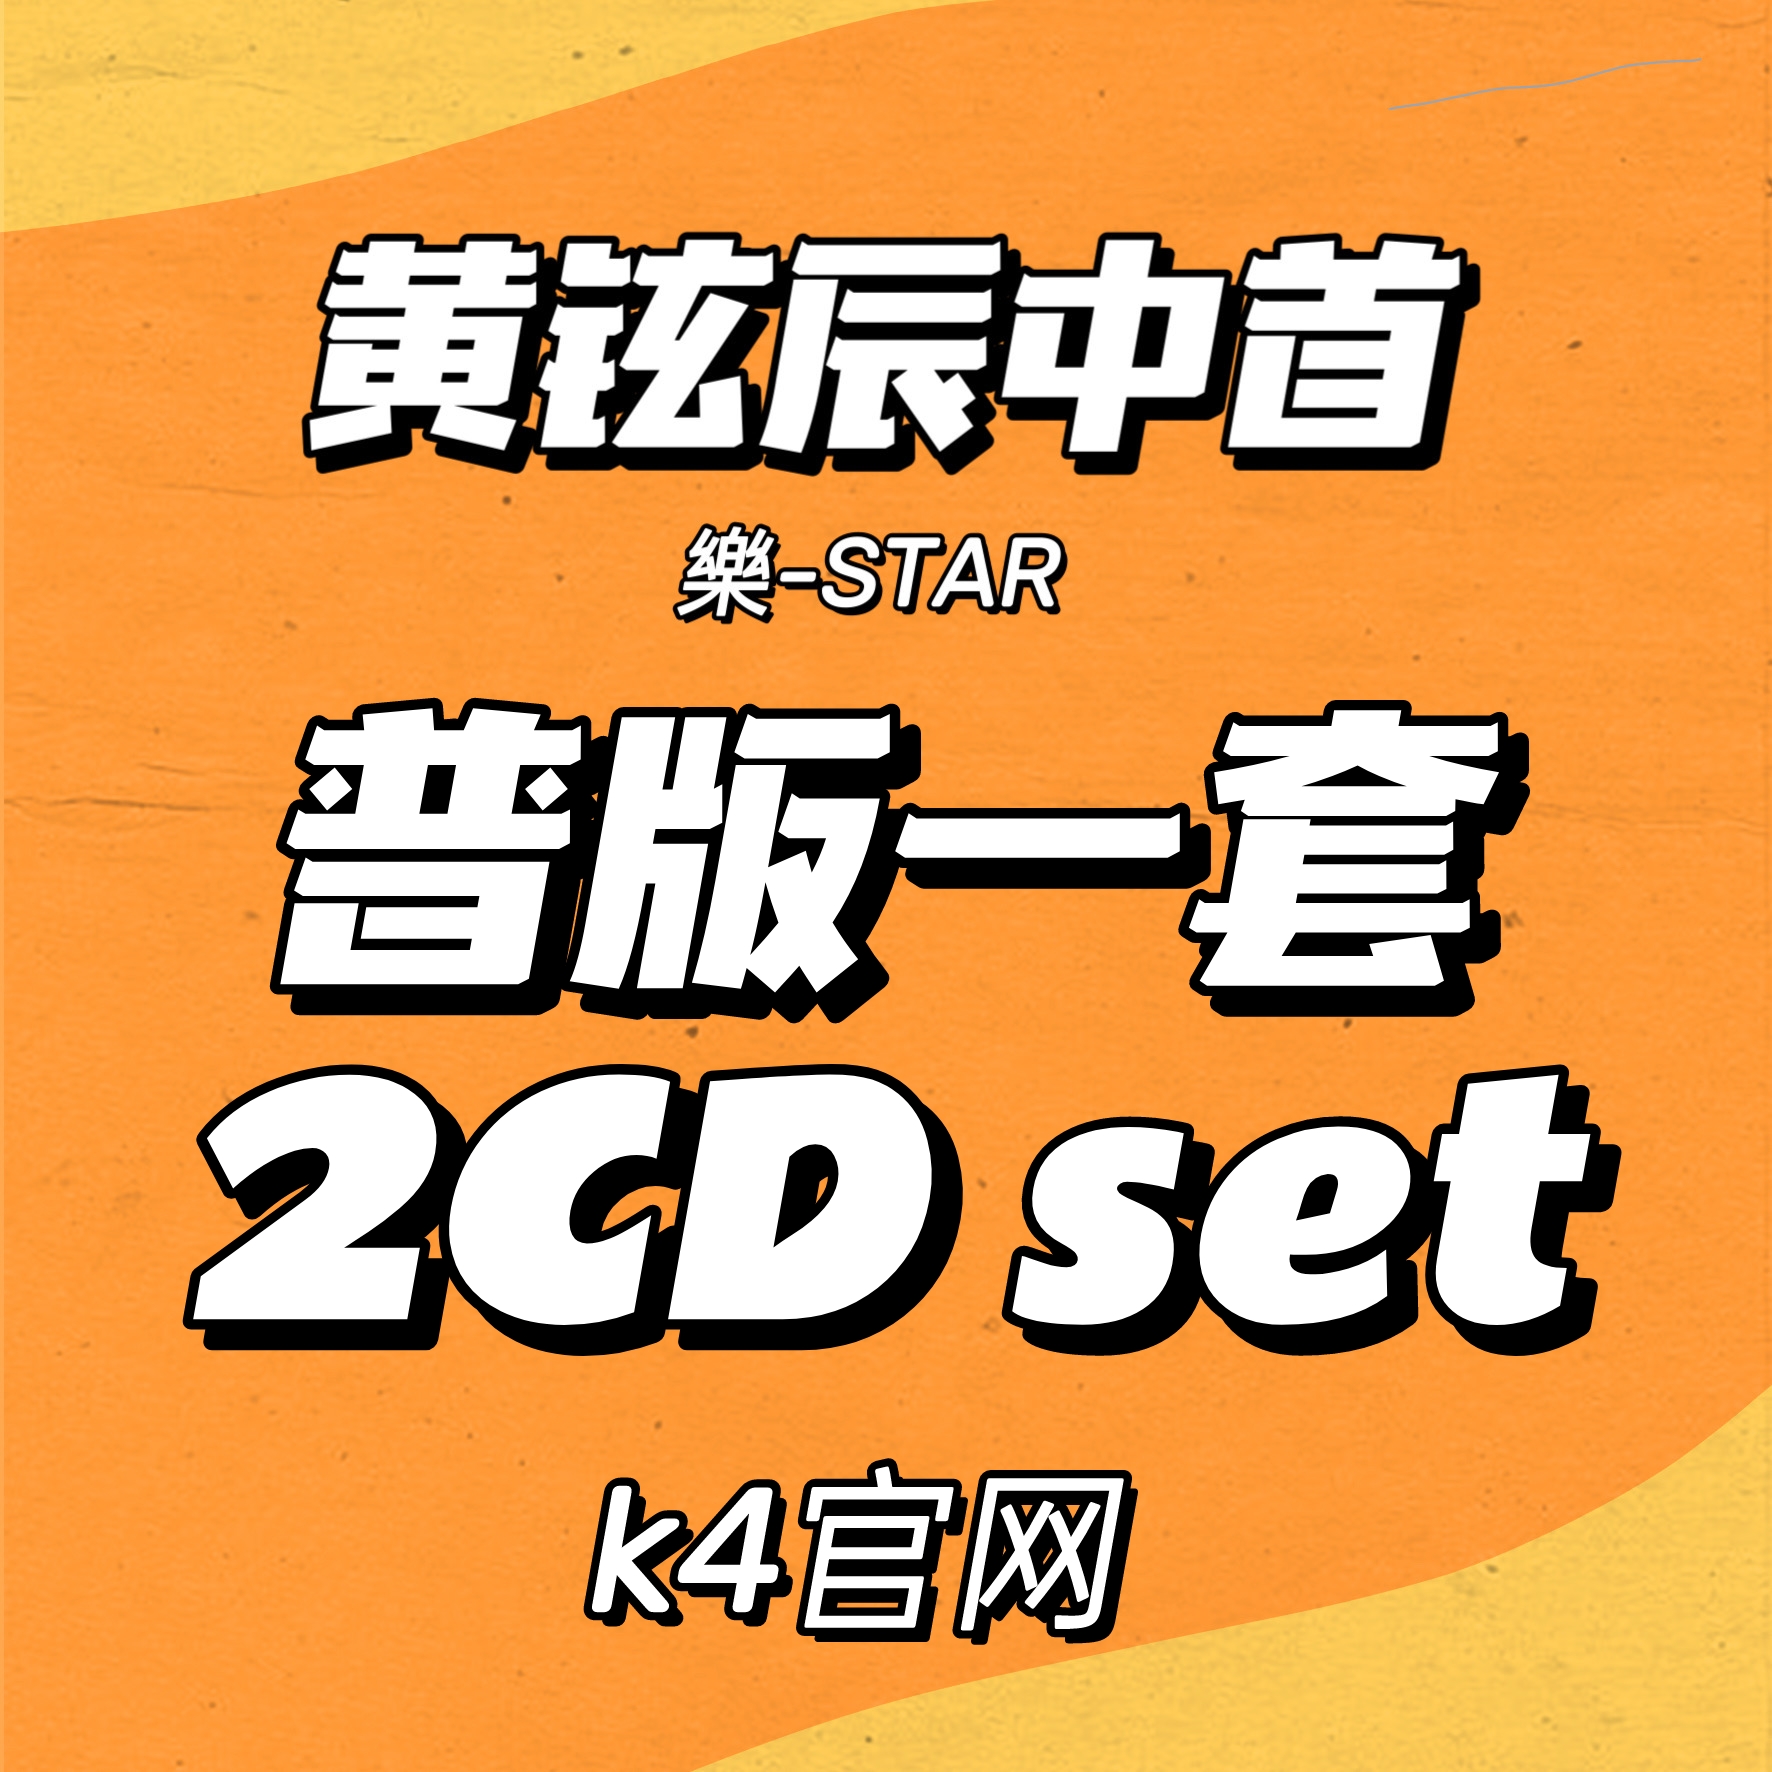 [全款 裸专] [2CD SET] Stray Kids - Mini Album [樂-STAR] (ROCK VER. + ROLL VER.) _黄铉辰Hyunjin_中文首站